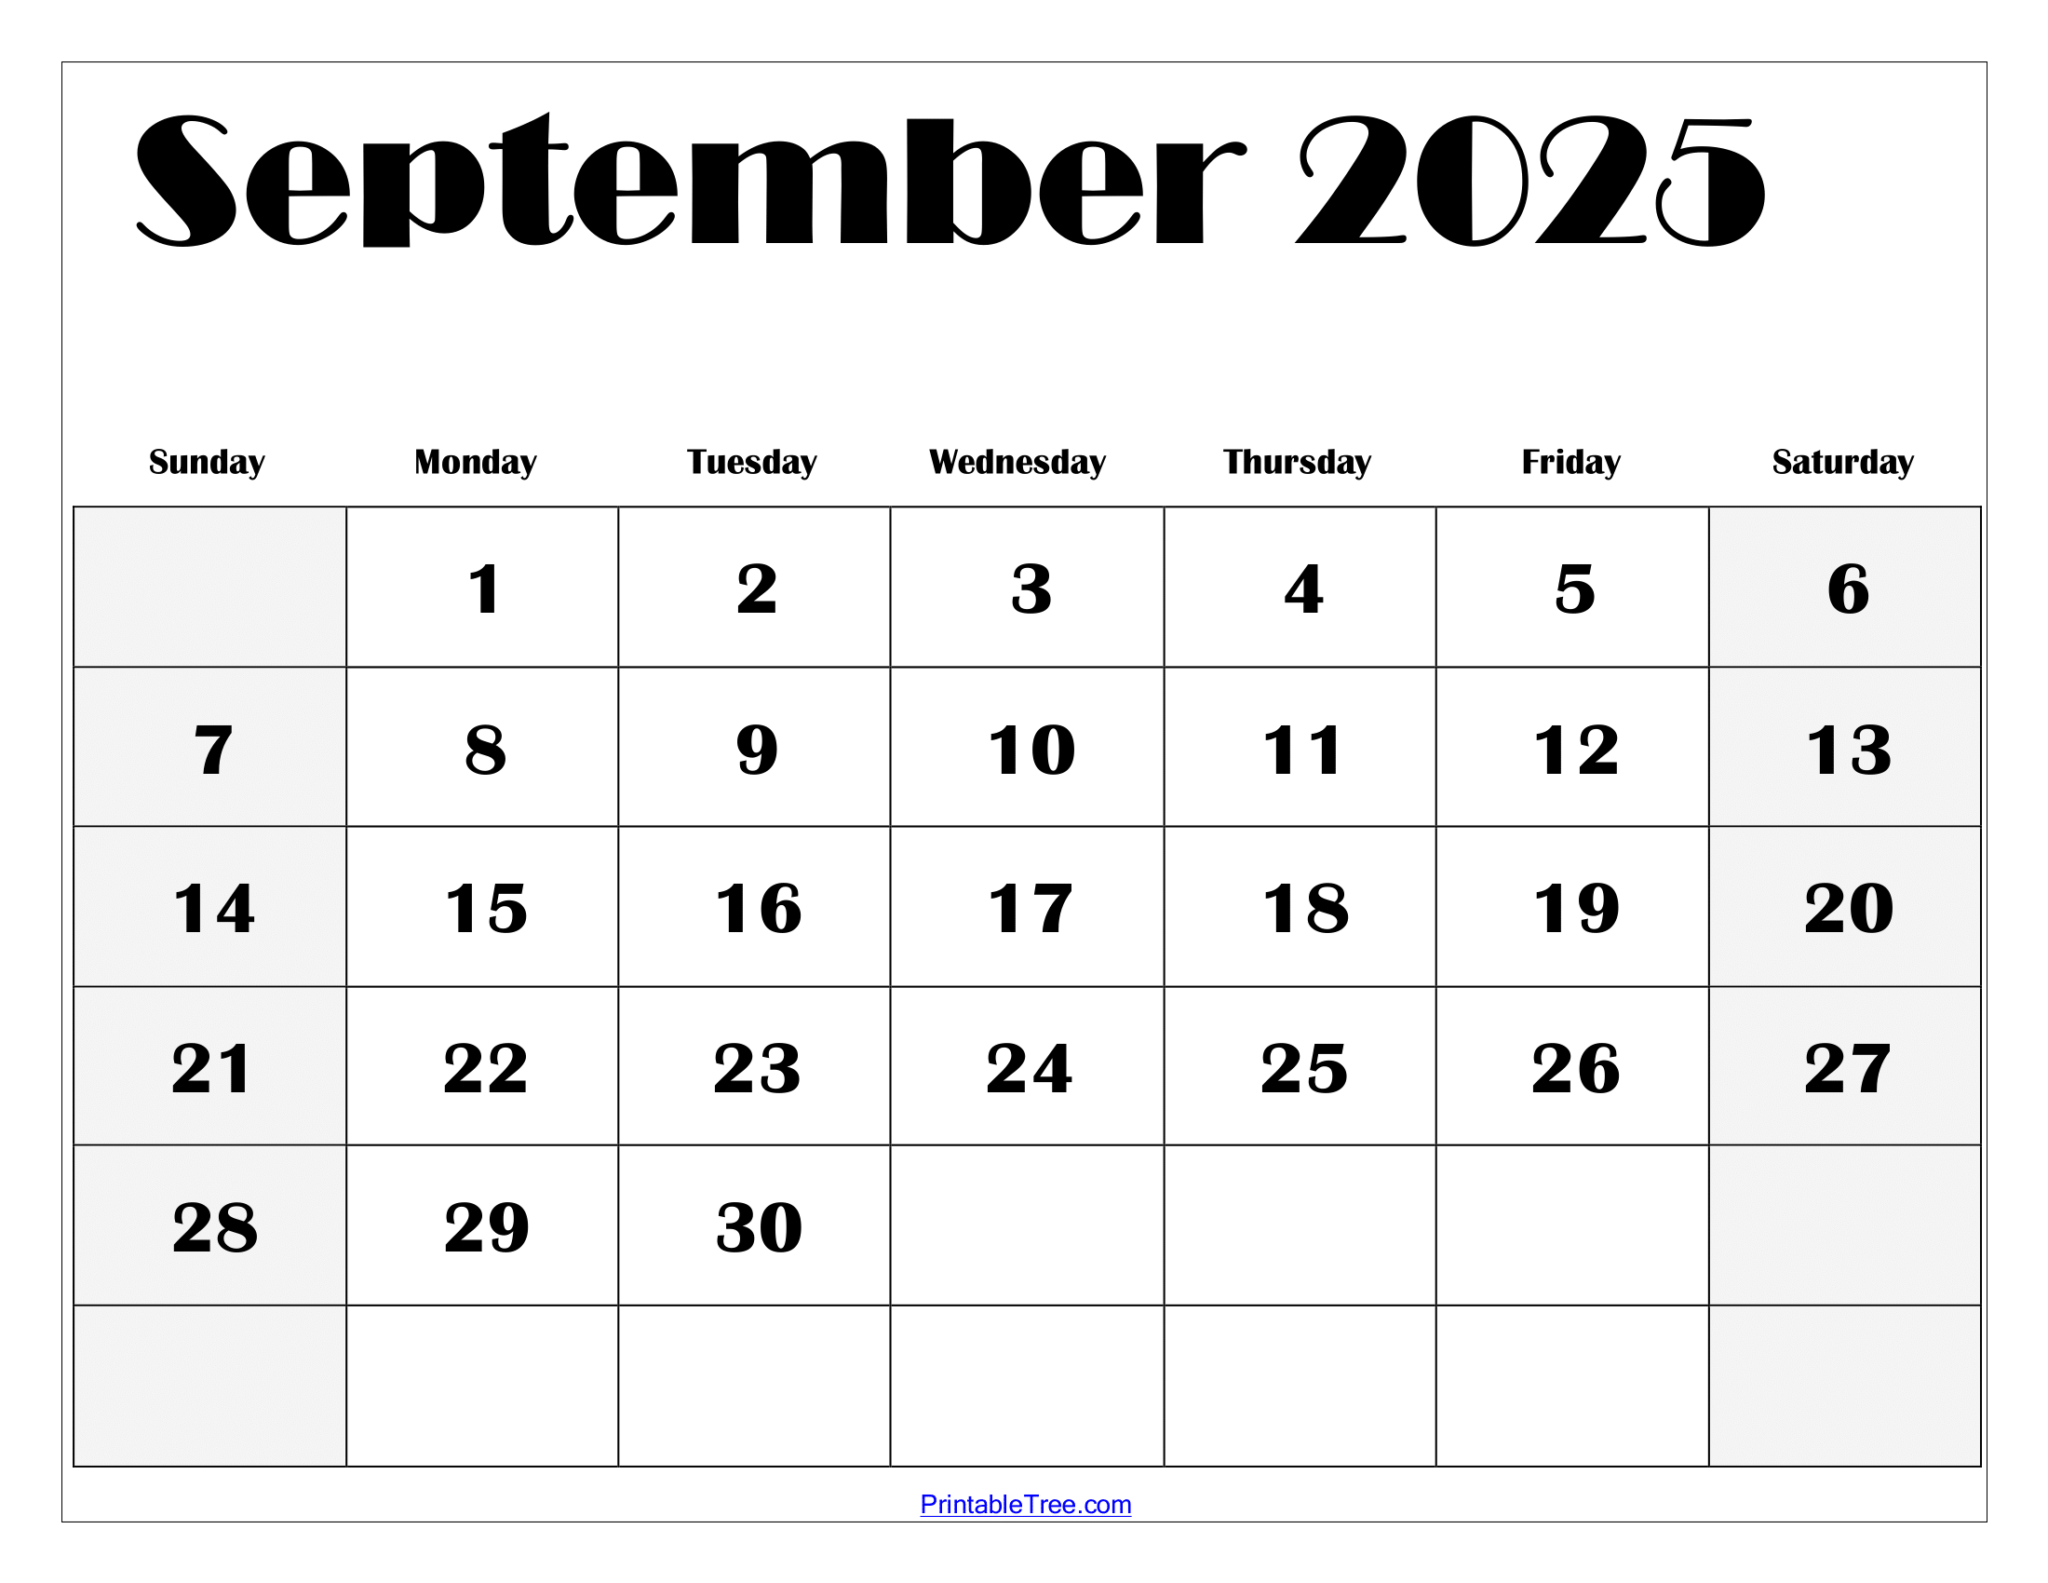 September 2025 Calendar Printable PDF Template with Holidays